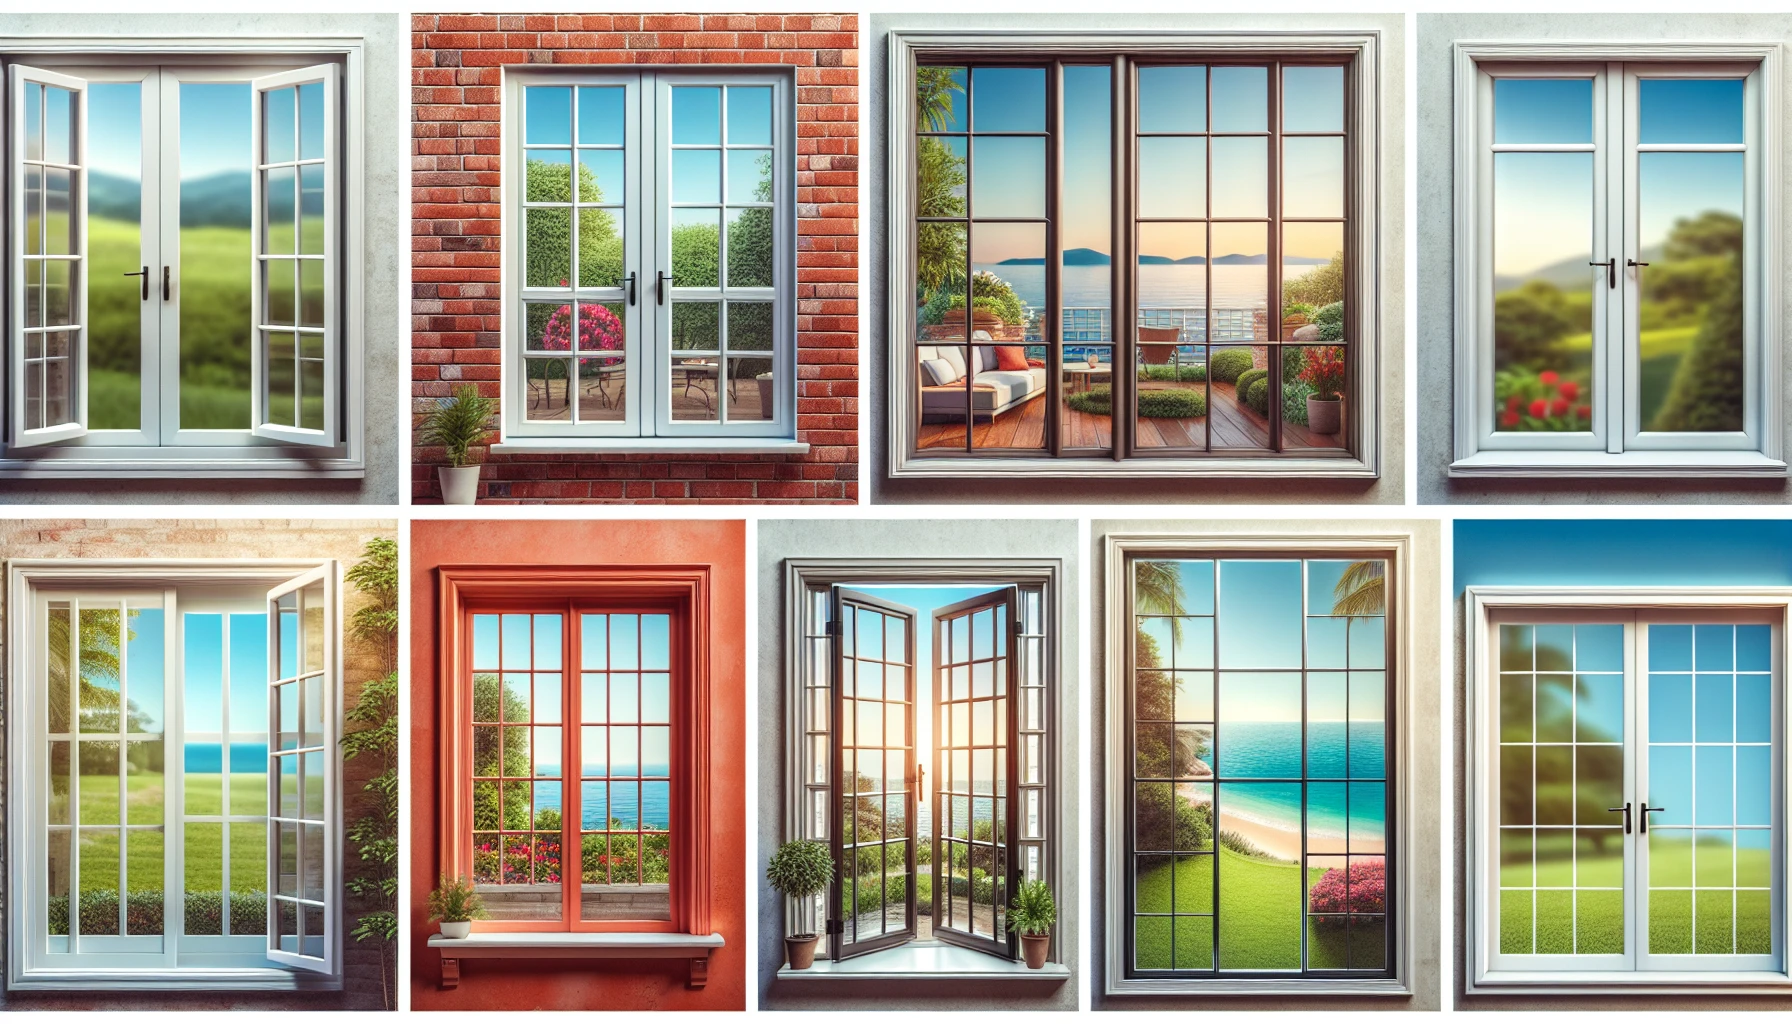 Illustration of different window styles